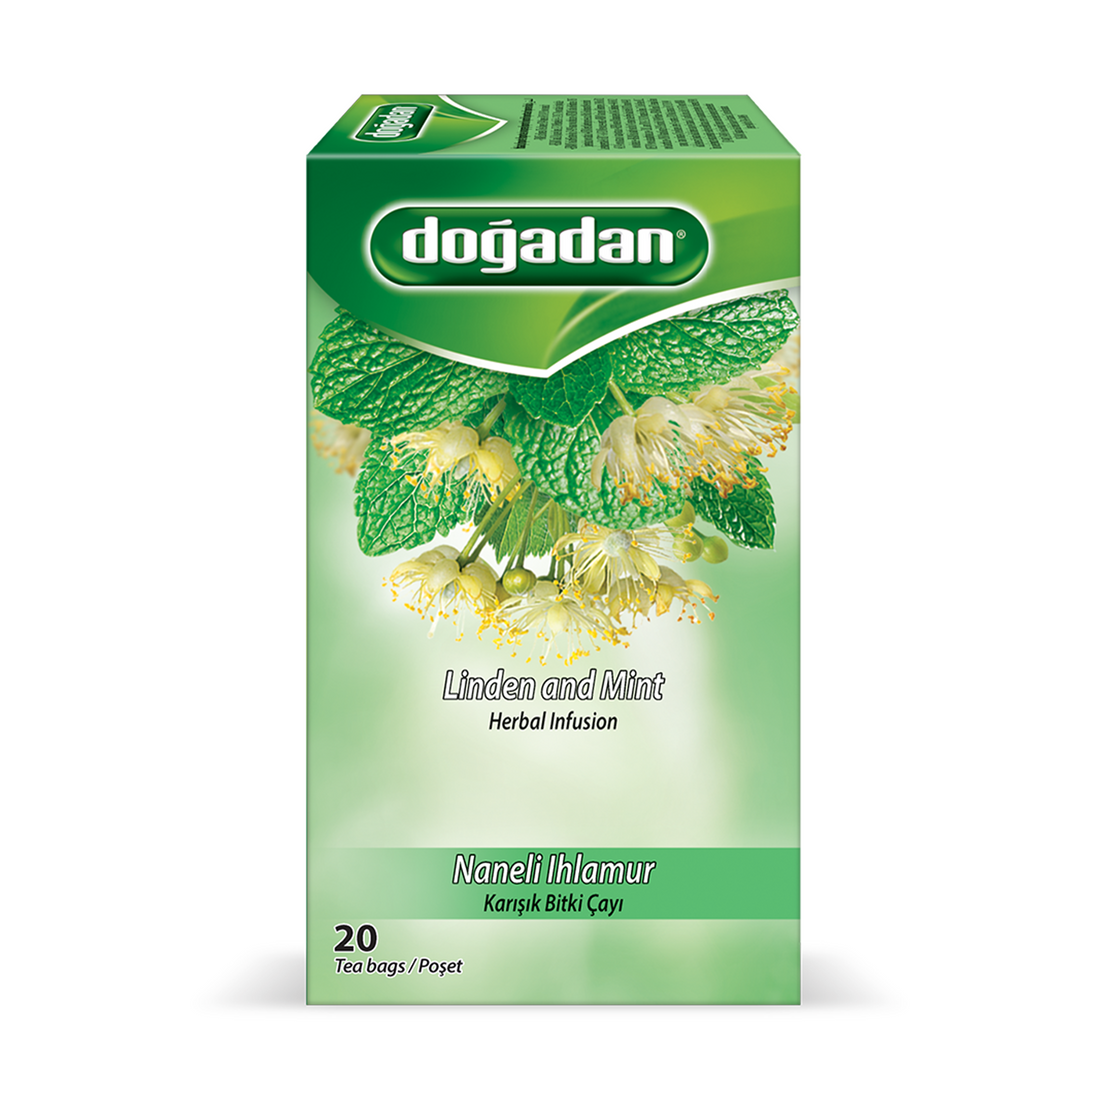 Dogadan Linden and Mint Herbal Infusion 1.5g×20P | Dogadan Naneli Ihlamur Karisik Bitki Cayi 